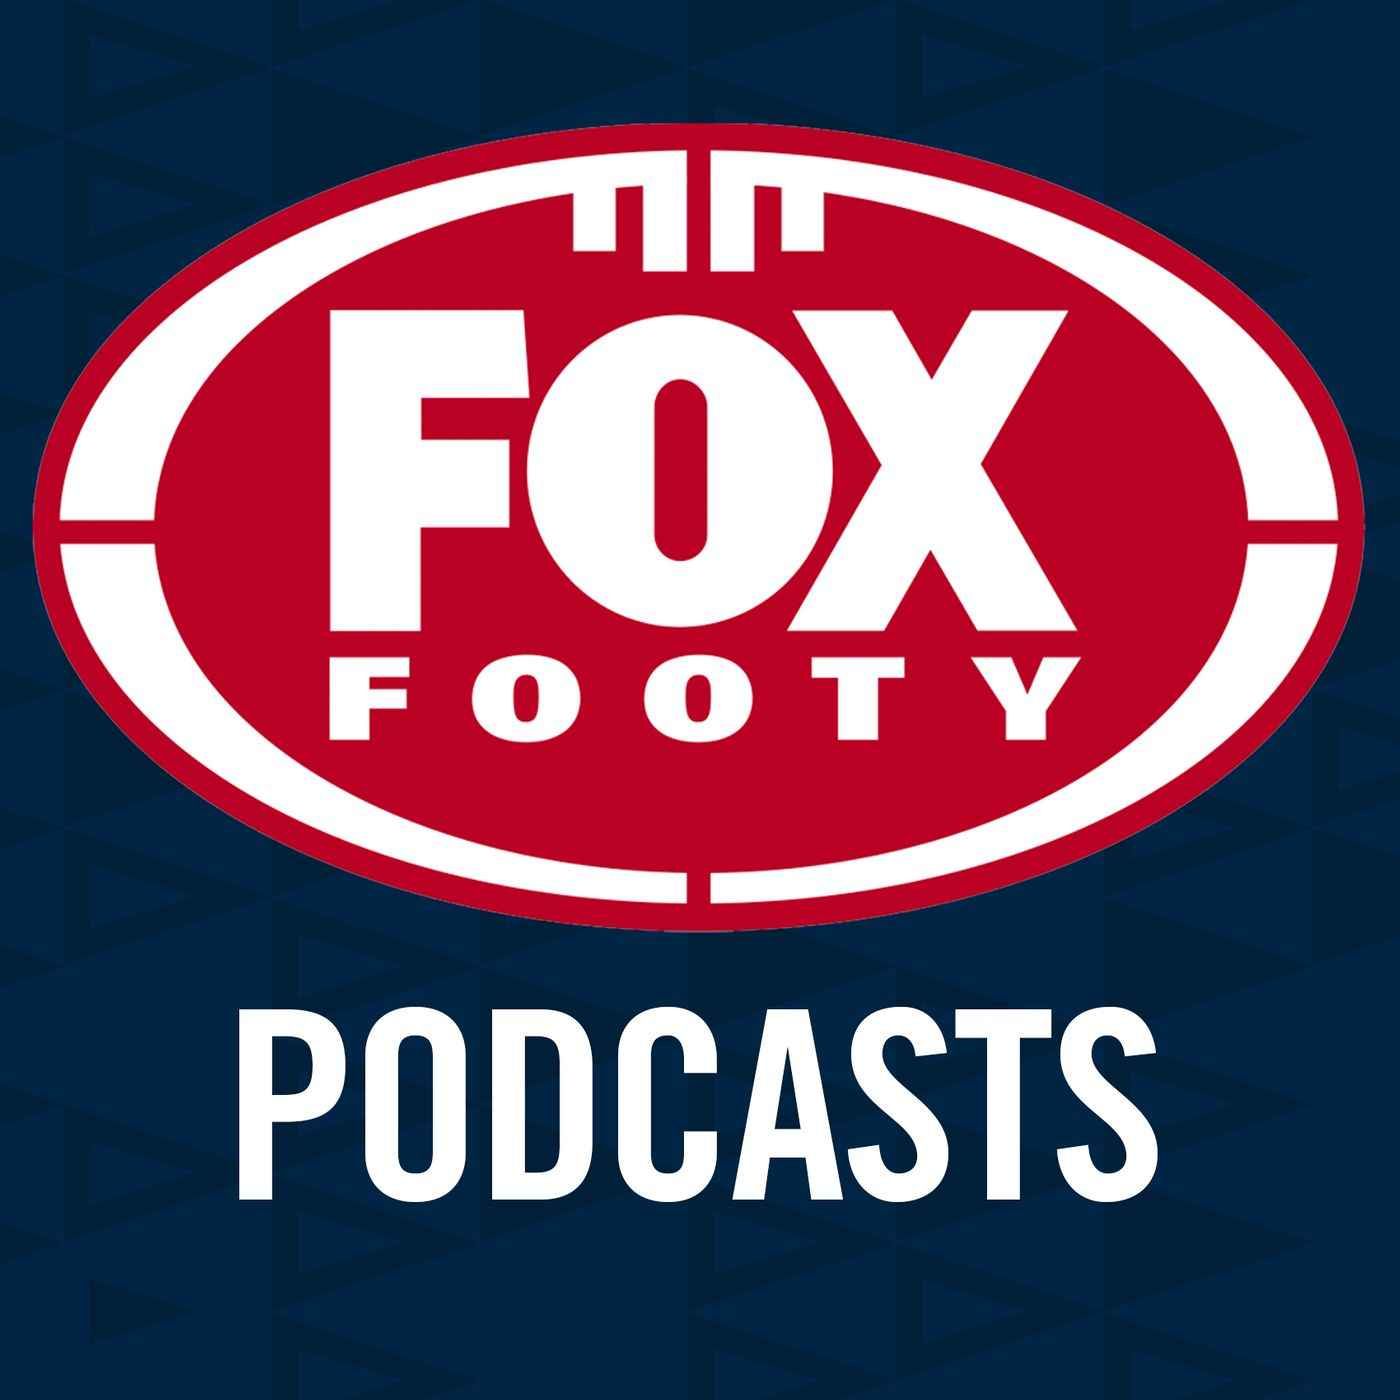 Fox Footy Podcast: Coach carousel spinning, Suns keep winning